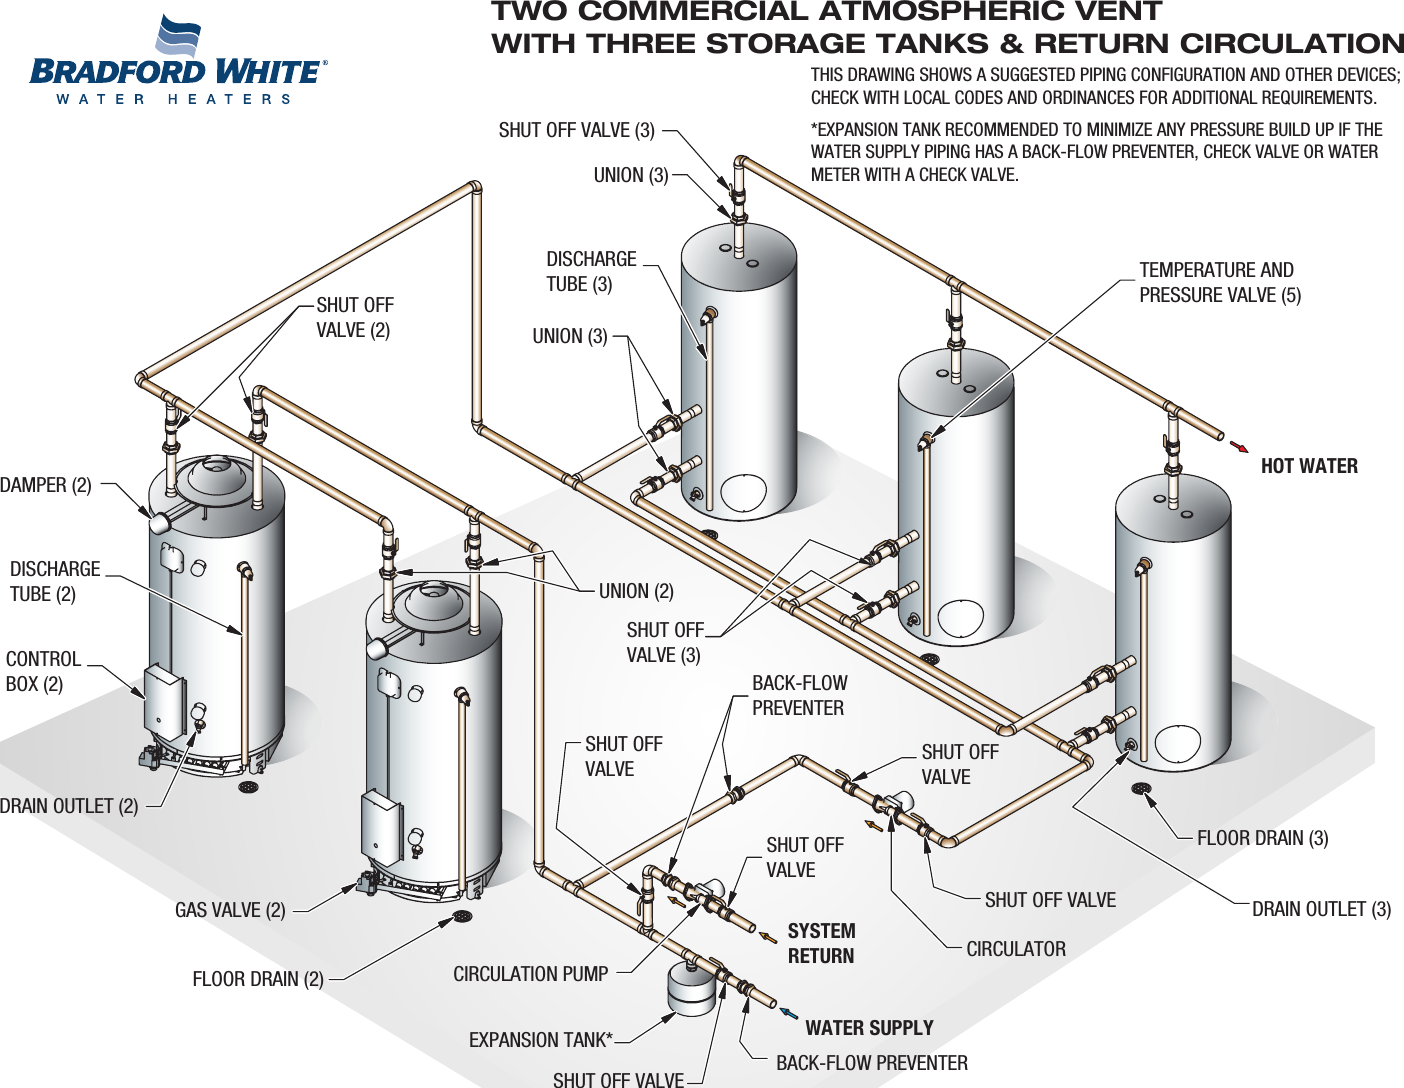 [DIAGRAM] Piping Diagram For Hot Water Storage Tank - MYDIAGRAM.ONLINE